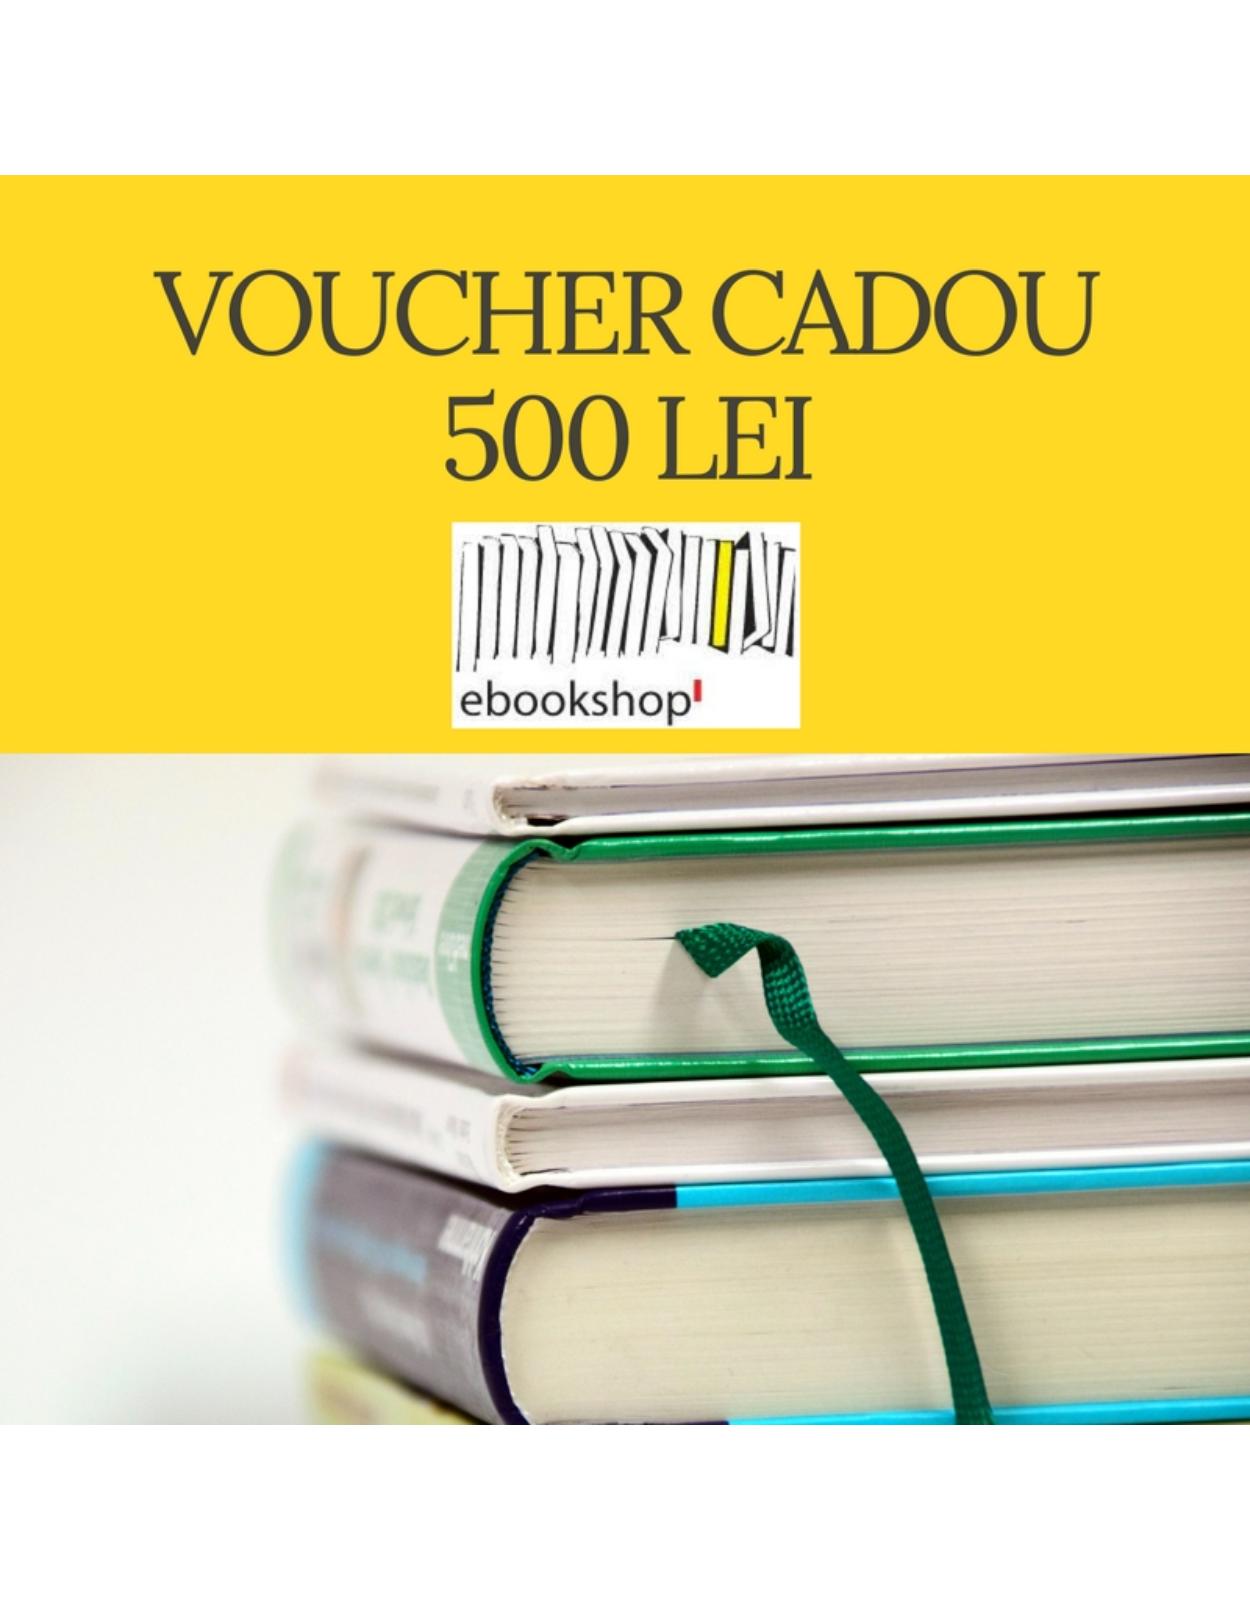 Voucher cadou 500 lei ebookshop.ro